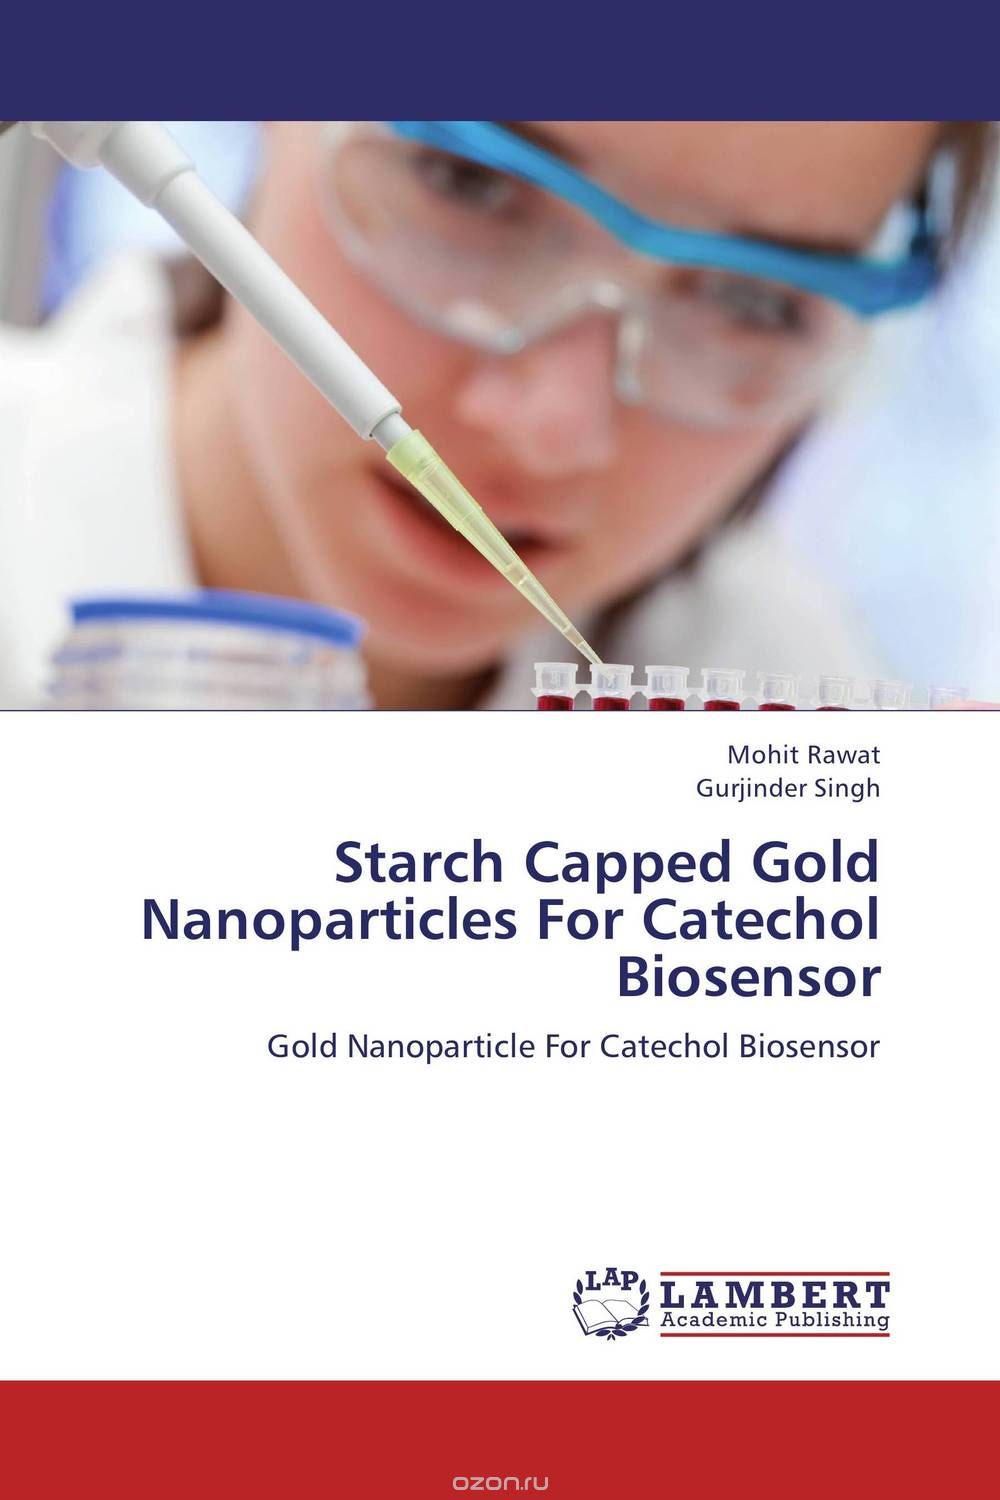 Скачать книгу "Starch Capped Gold Nanoparticles For Catechol Biosensor"